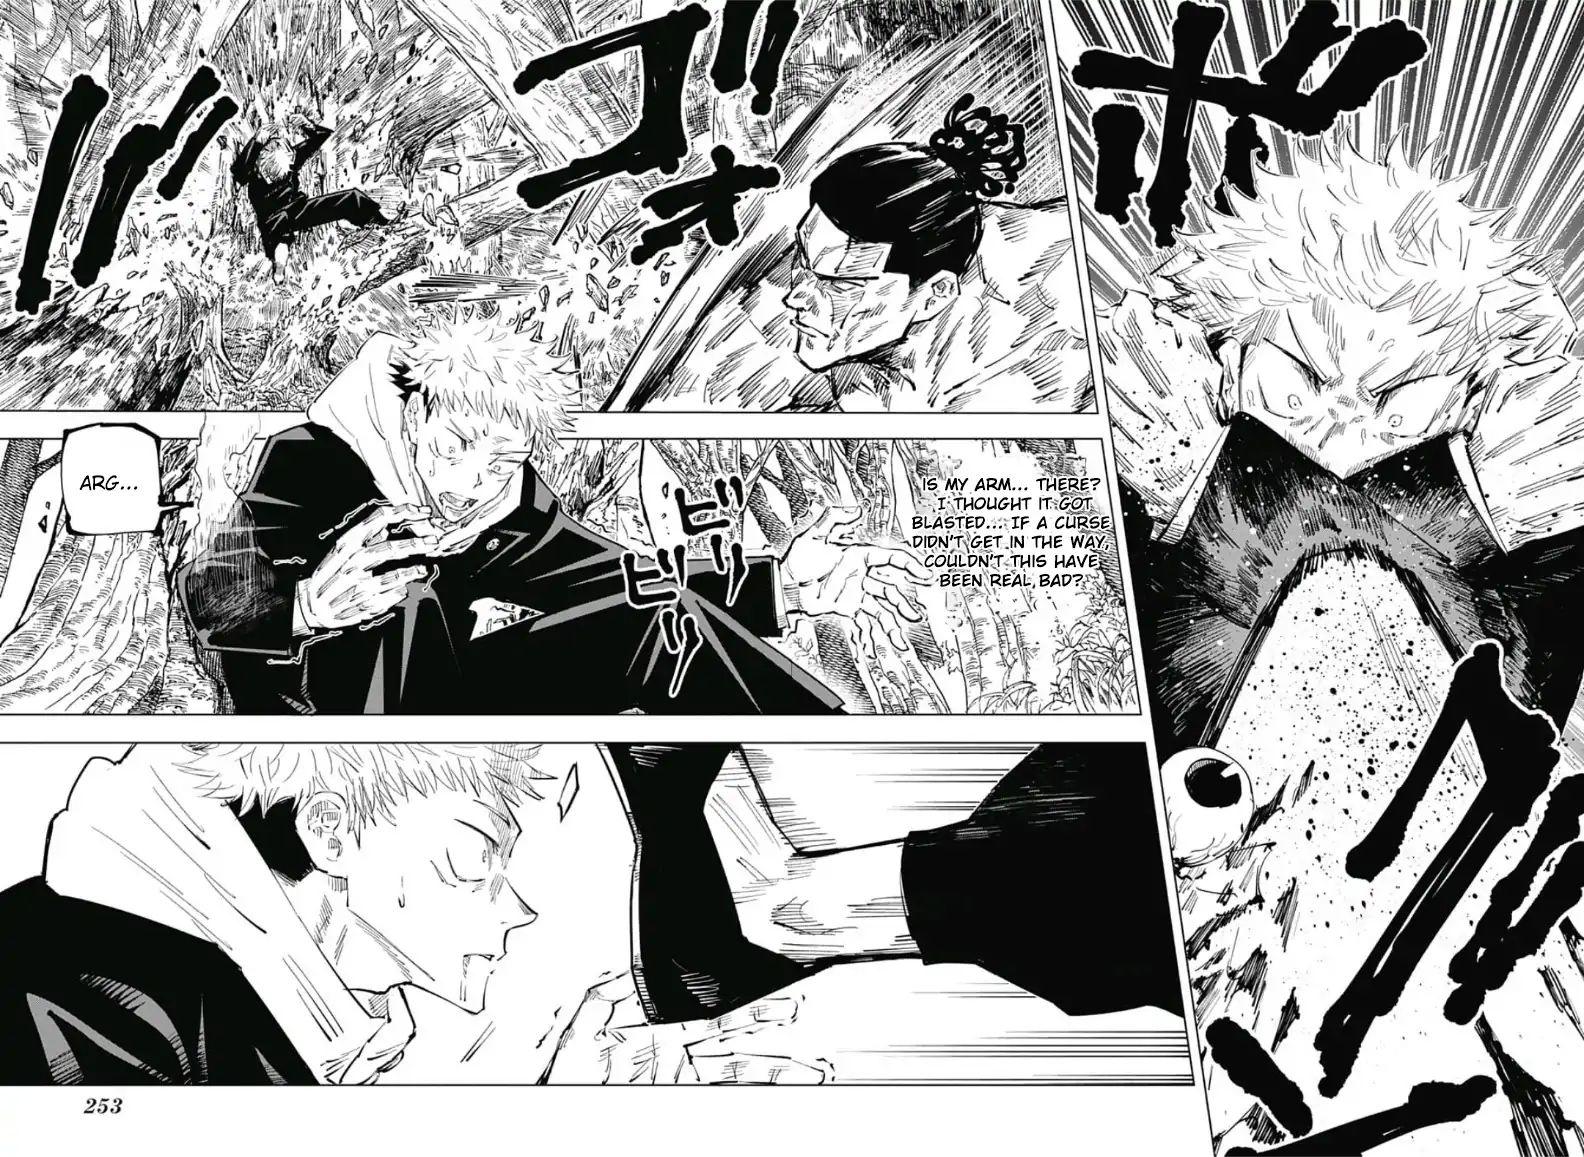 Jujutsu Kaisen Chapter 34: Exchange Festival With The Kyoto School - Team Battle 1 page 13 - Mangakakalot